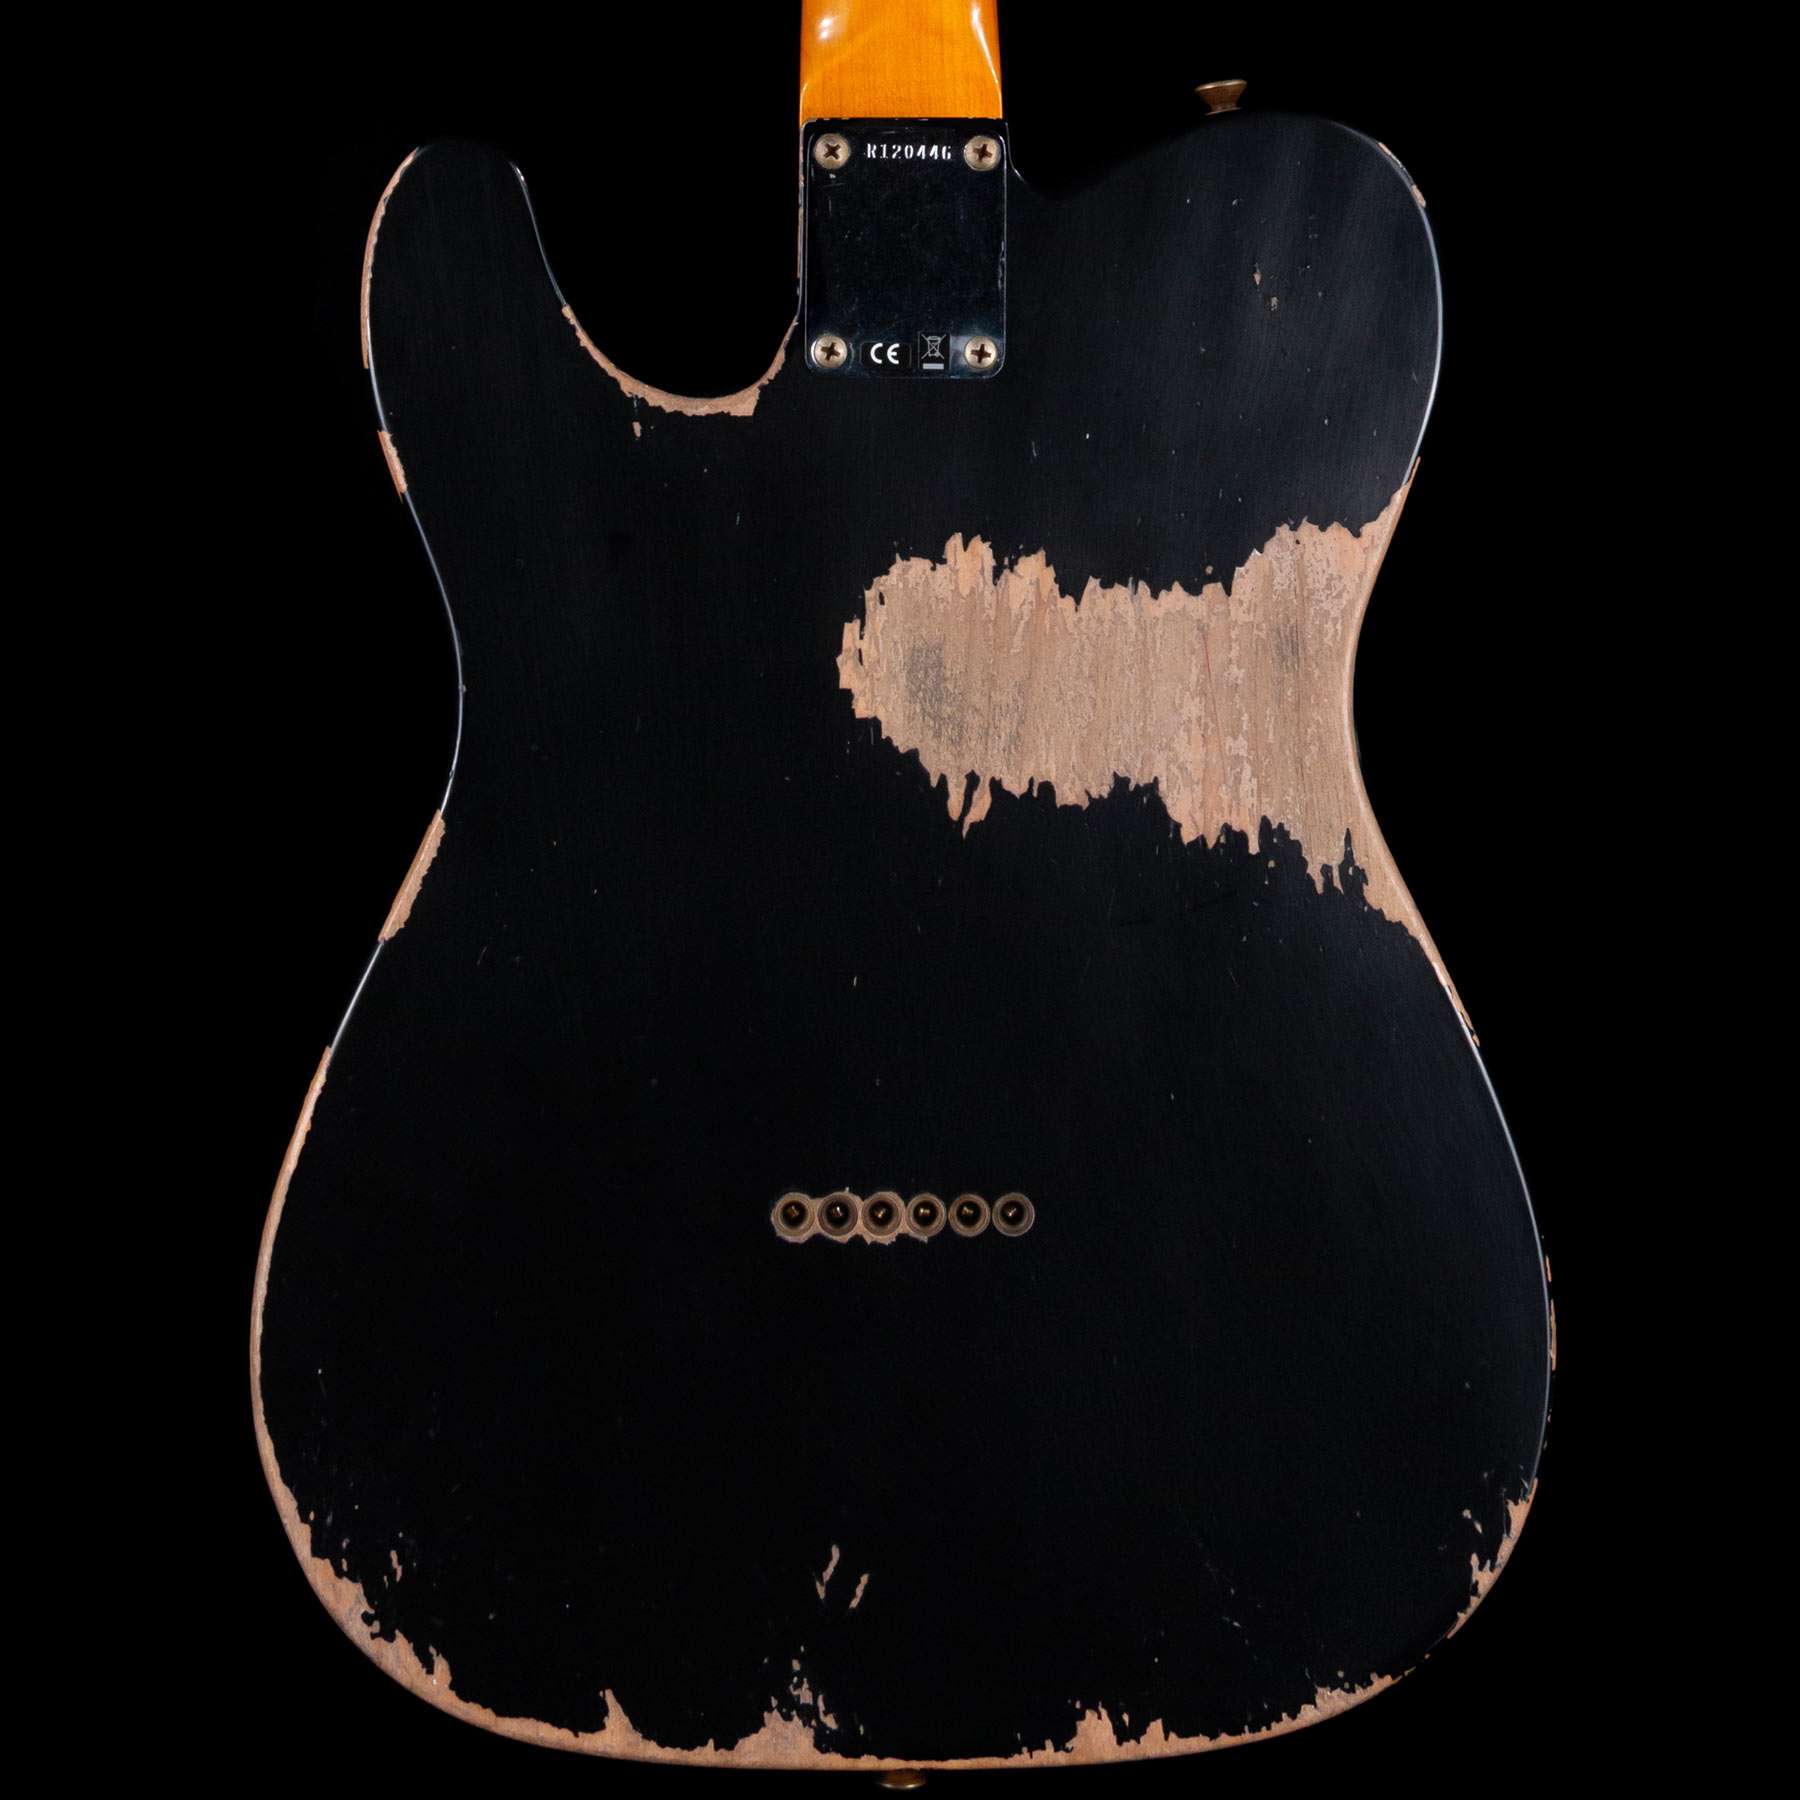 Fender Custom Shop 1963 Telecaster Heavy Relic Rosewood Board Black